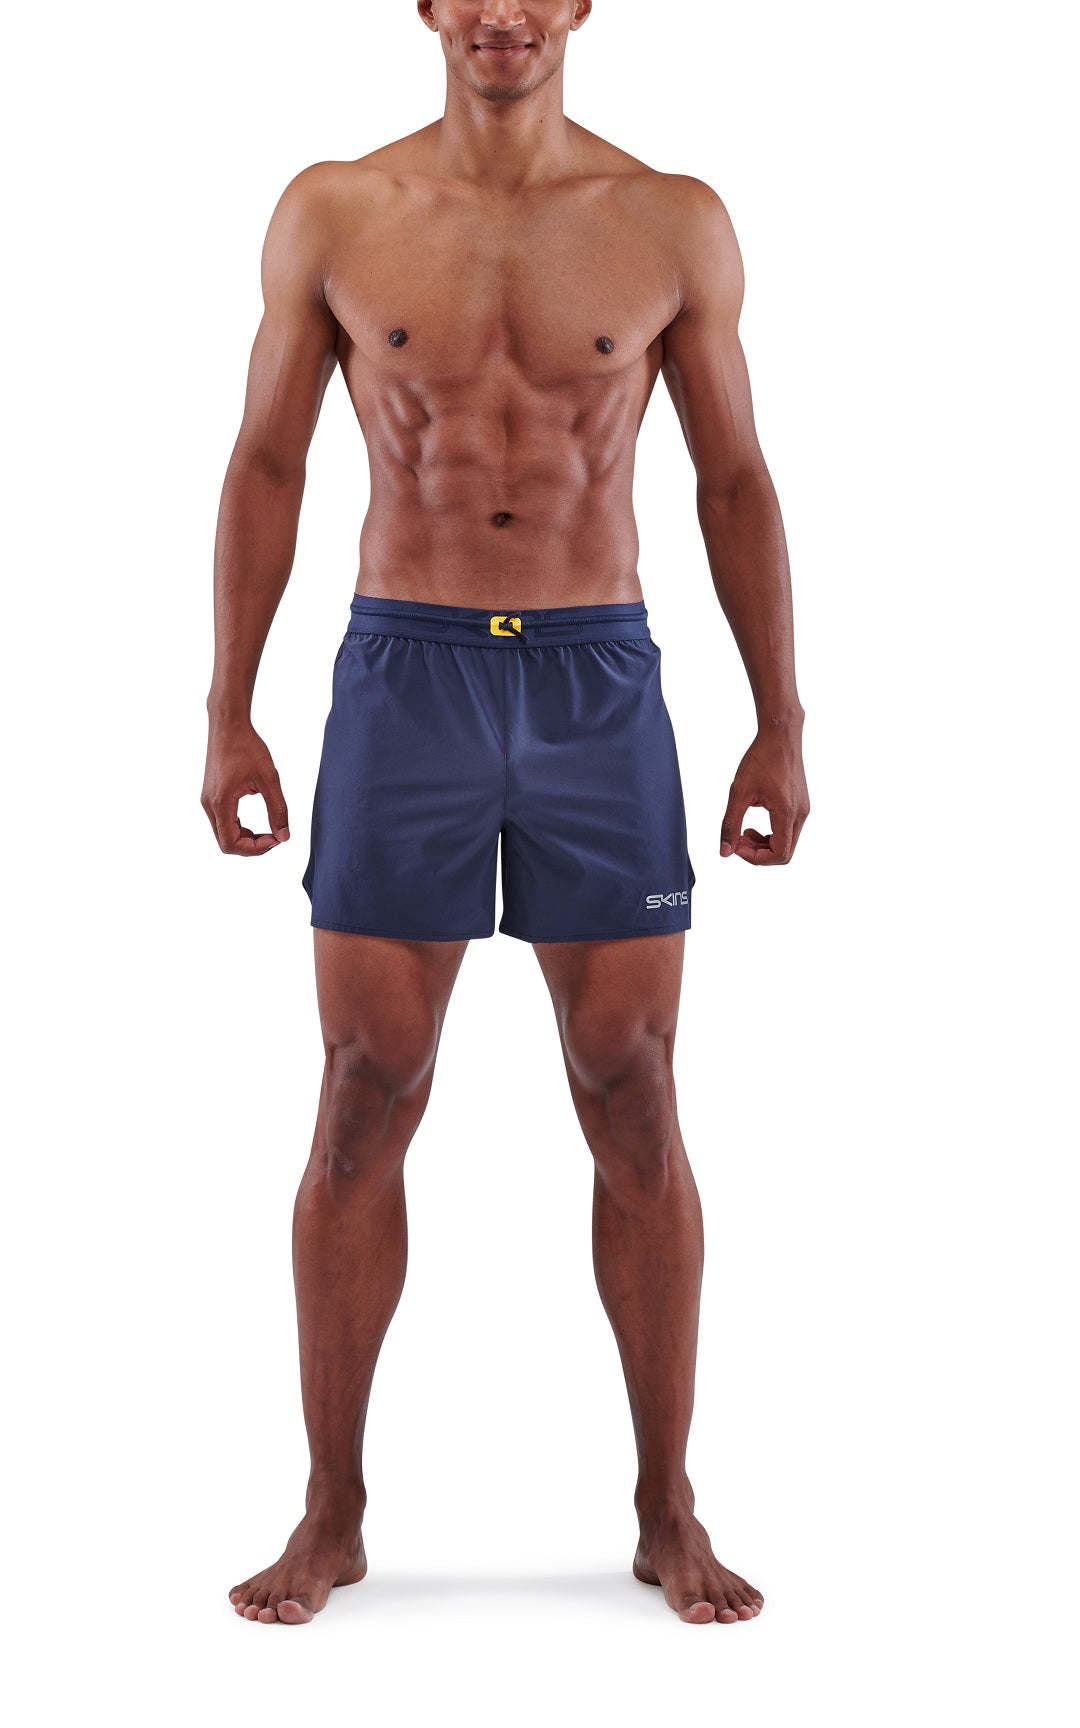 Skins Men's Activewear Series-3 Run Shorts- Navy Blue